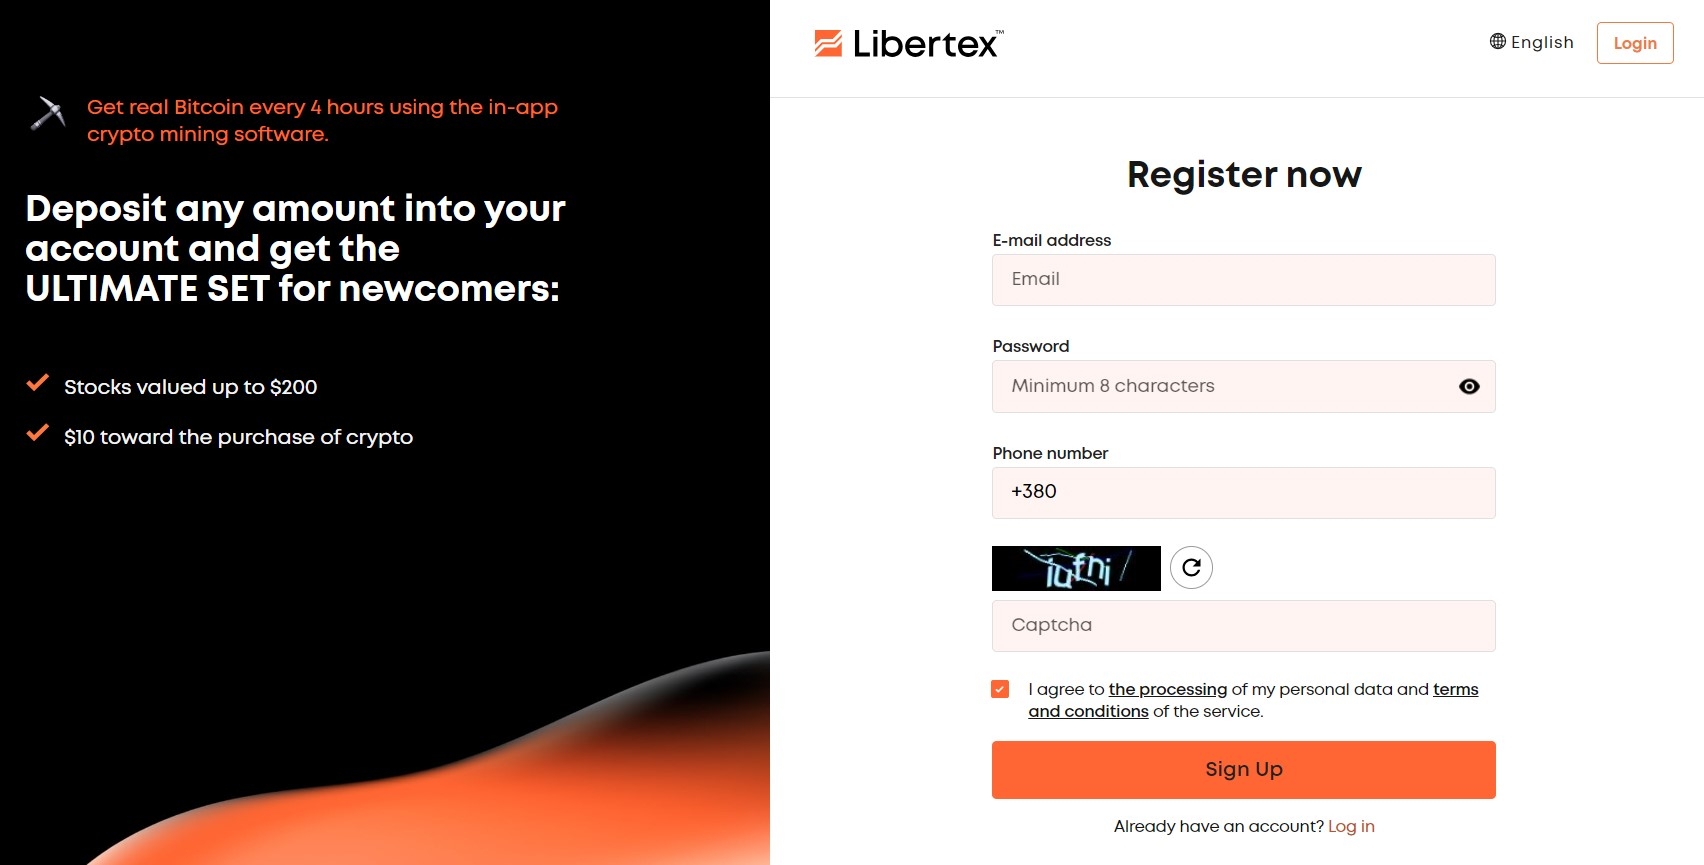 Registration at libertex.org